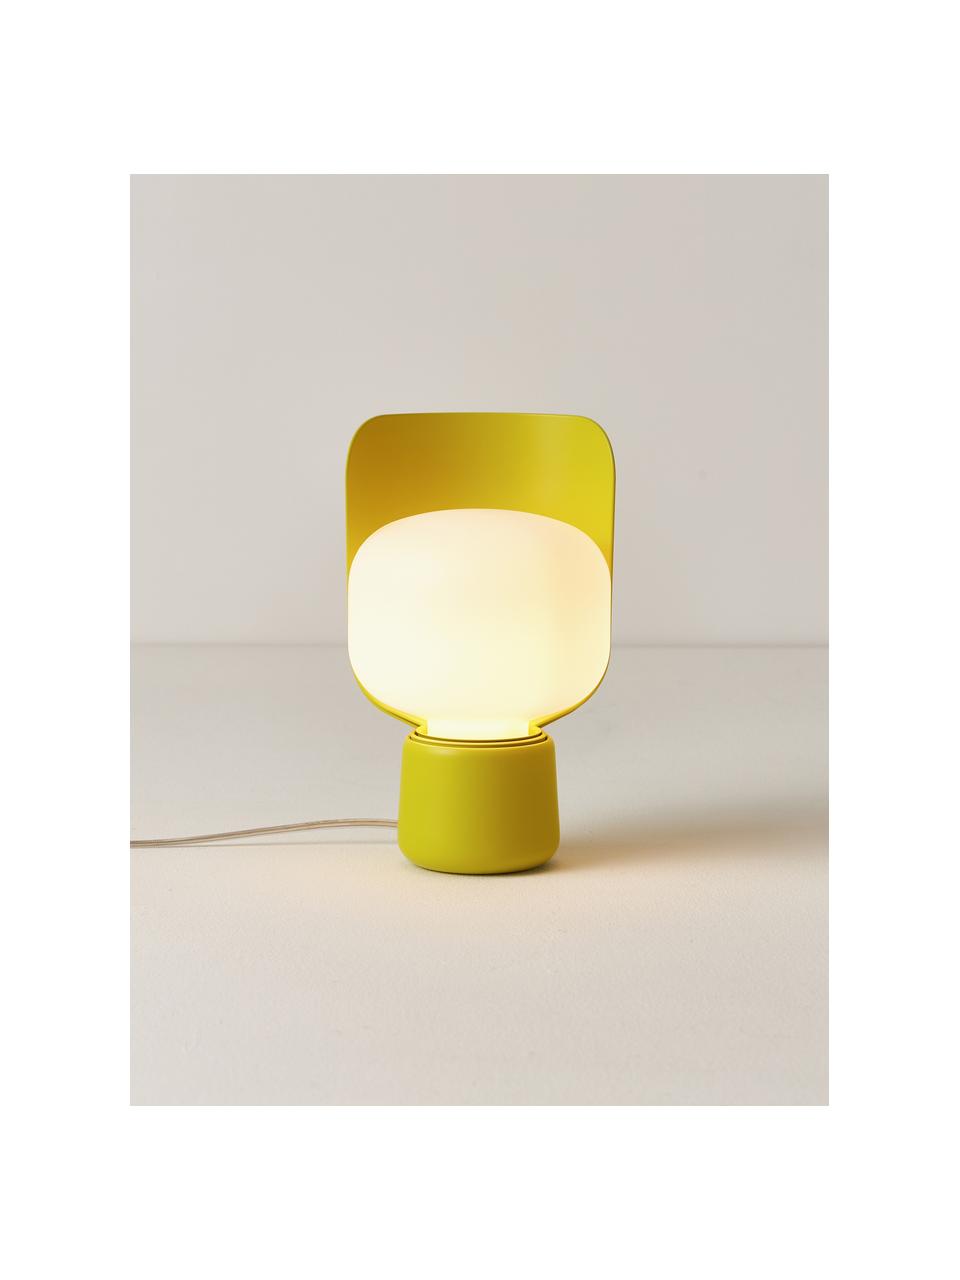 Petite lampe à poser artisanale Blom, Blanc, vert clair, Ø 15 x haut. 24 cm